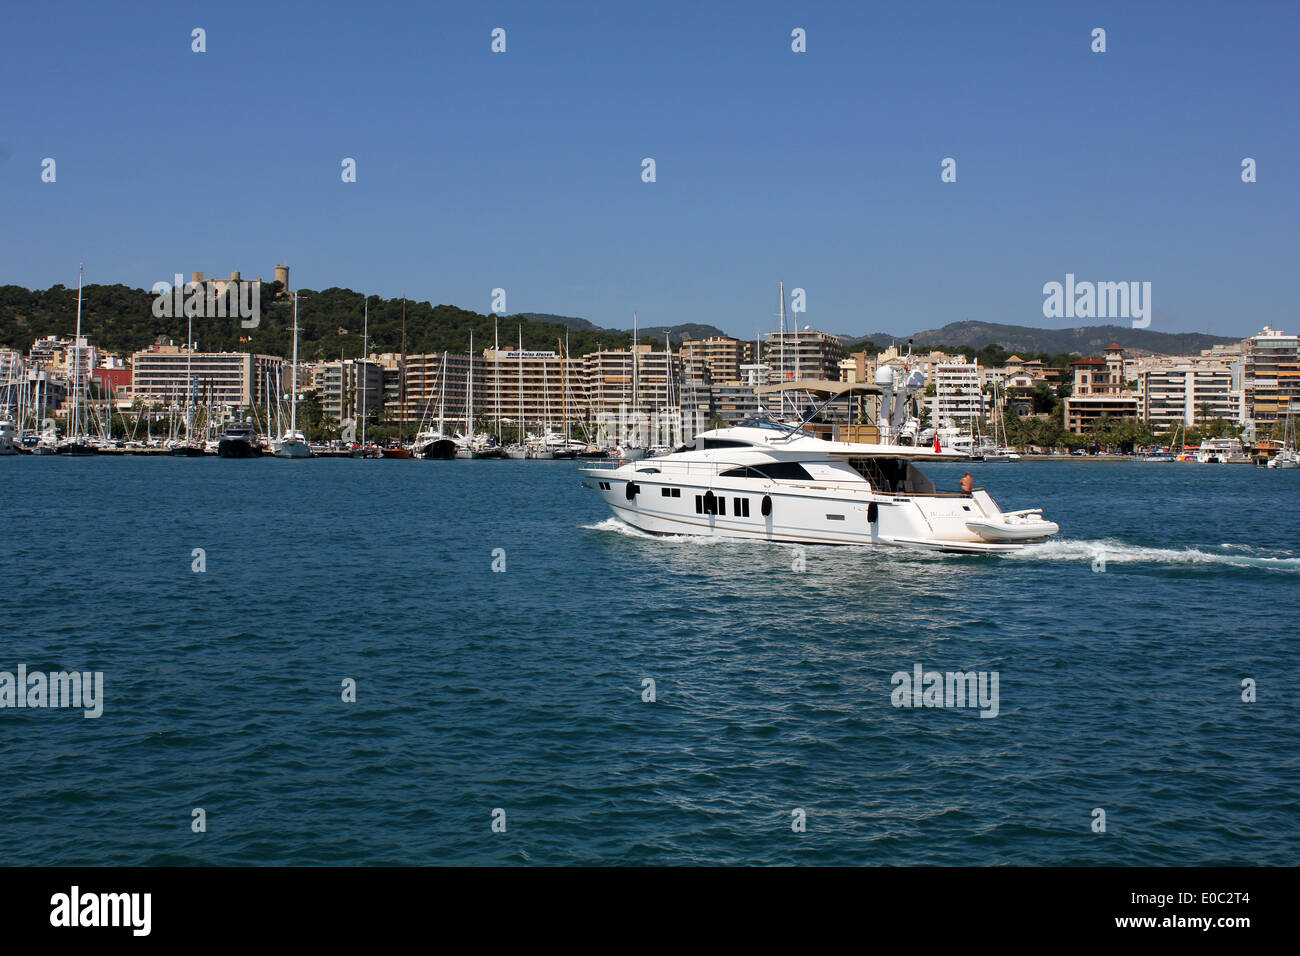 Luxury Mallorca - Luxury Fairline Motor Yacht - Palma Paseo Maritimo + marinas + historic Belver Castle - Palma de Mallorca Stock Photo